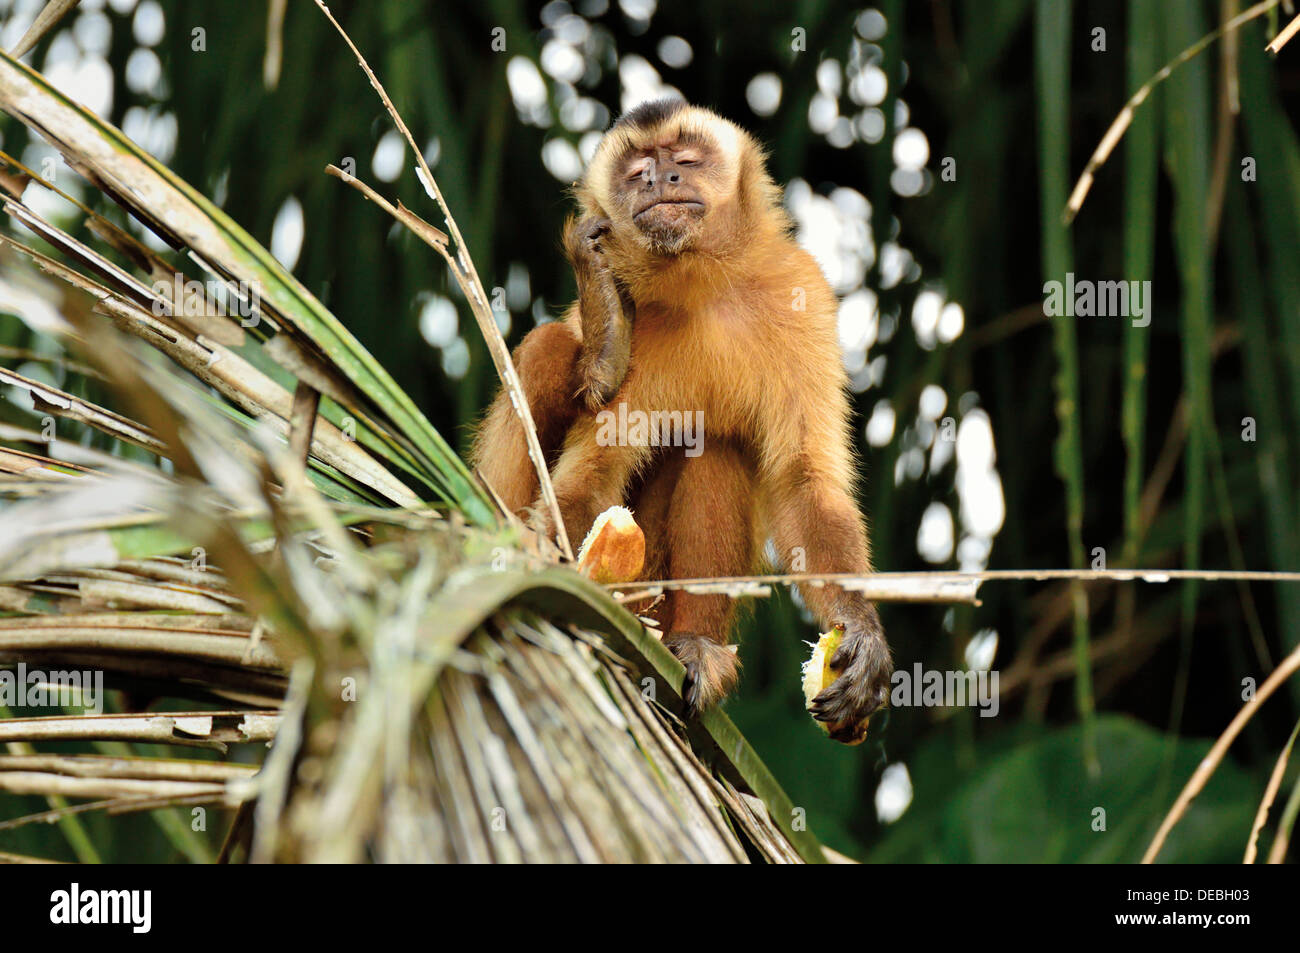 Brazil, Pantanal: Capuchin monkey (Cebus apella) scratching head and eating fruits Stock Photo